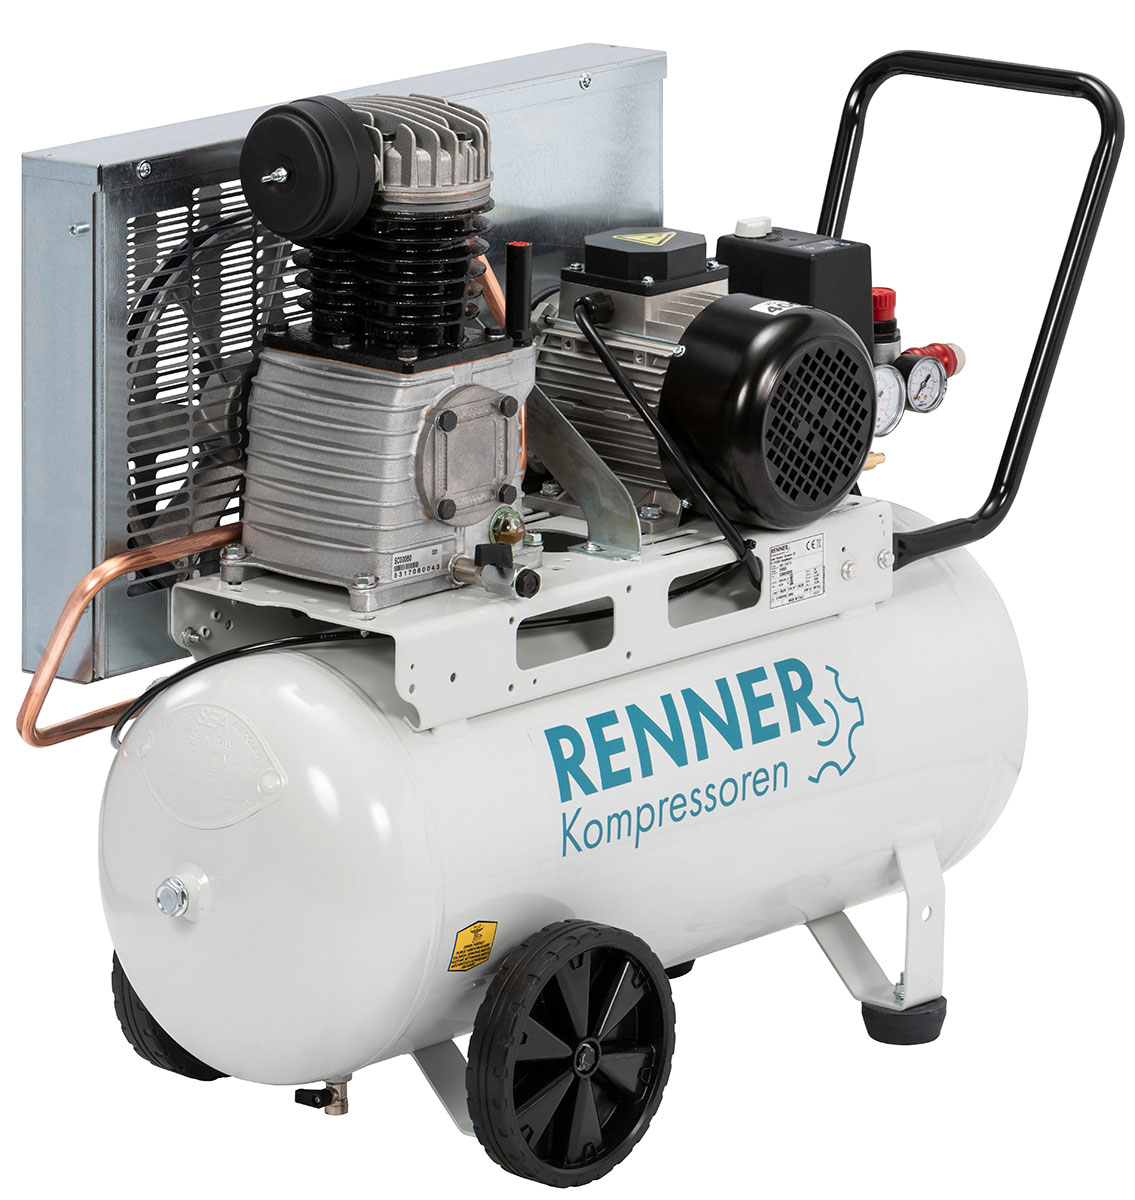 RENNER REKO Mobile Piston Compressor 1.5 - 4.0 kW For Industry And Craft, 10-11 Bar, 50-90 Liters